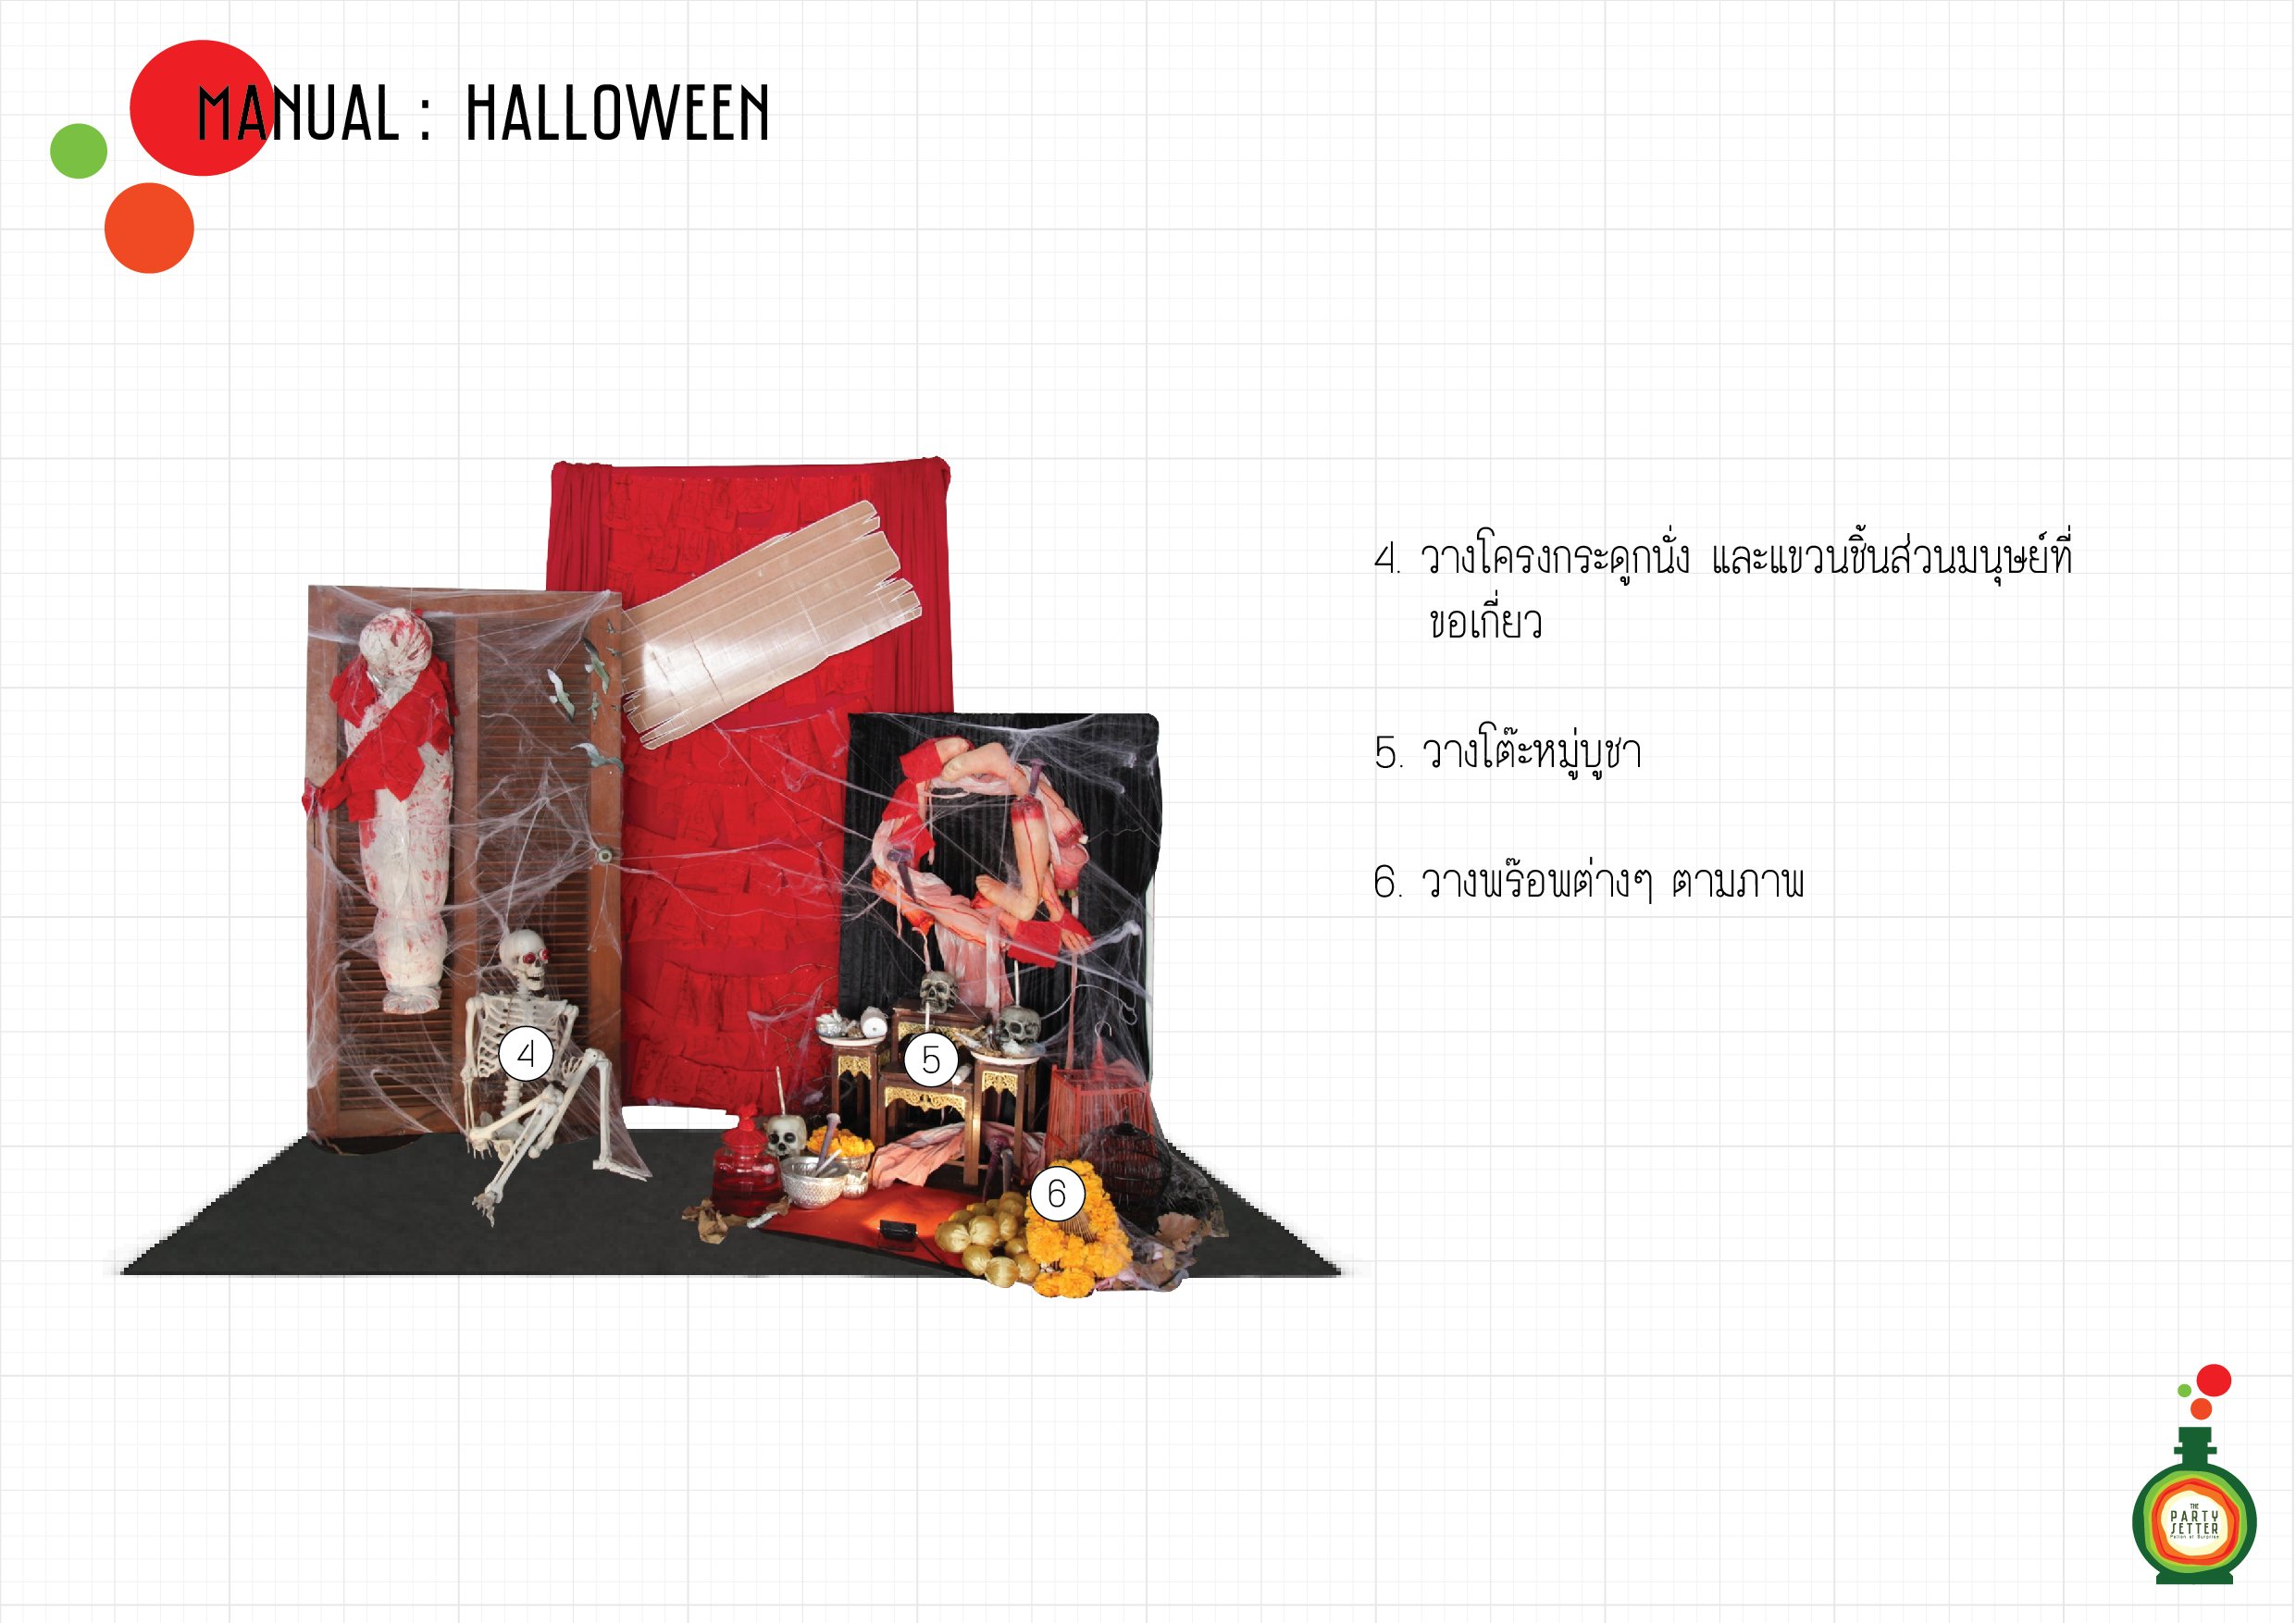 Manual_Halloween_02-04-01.jpg